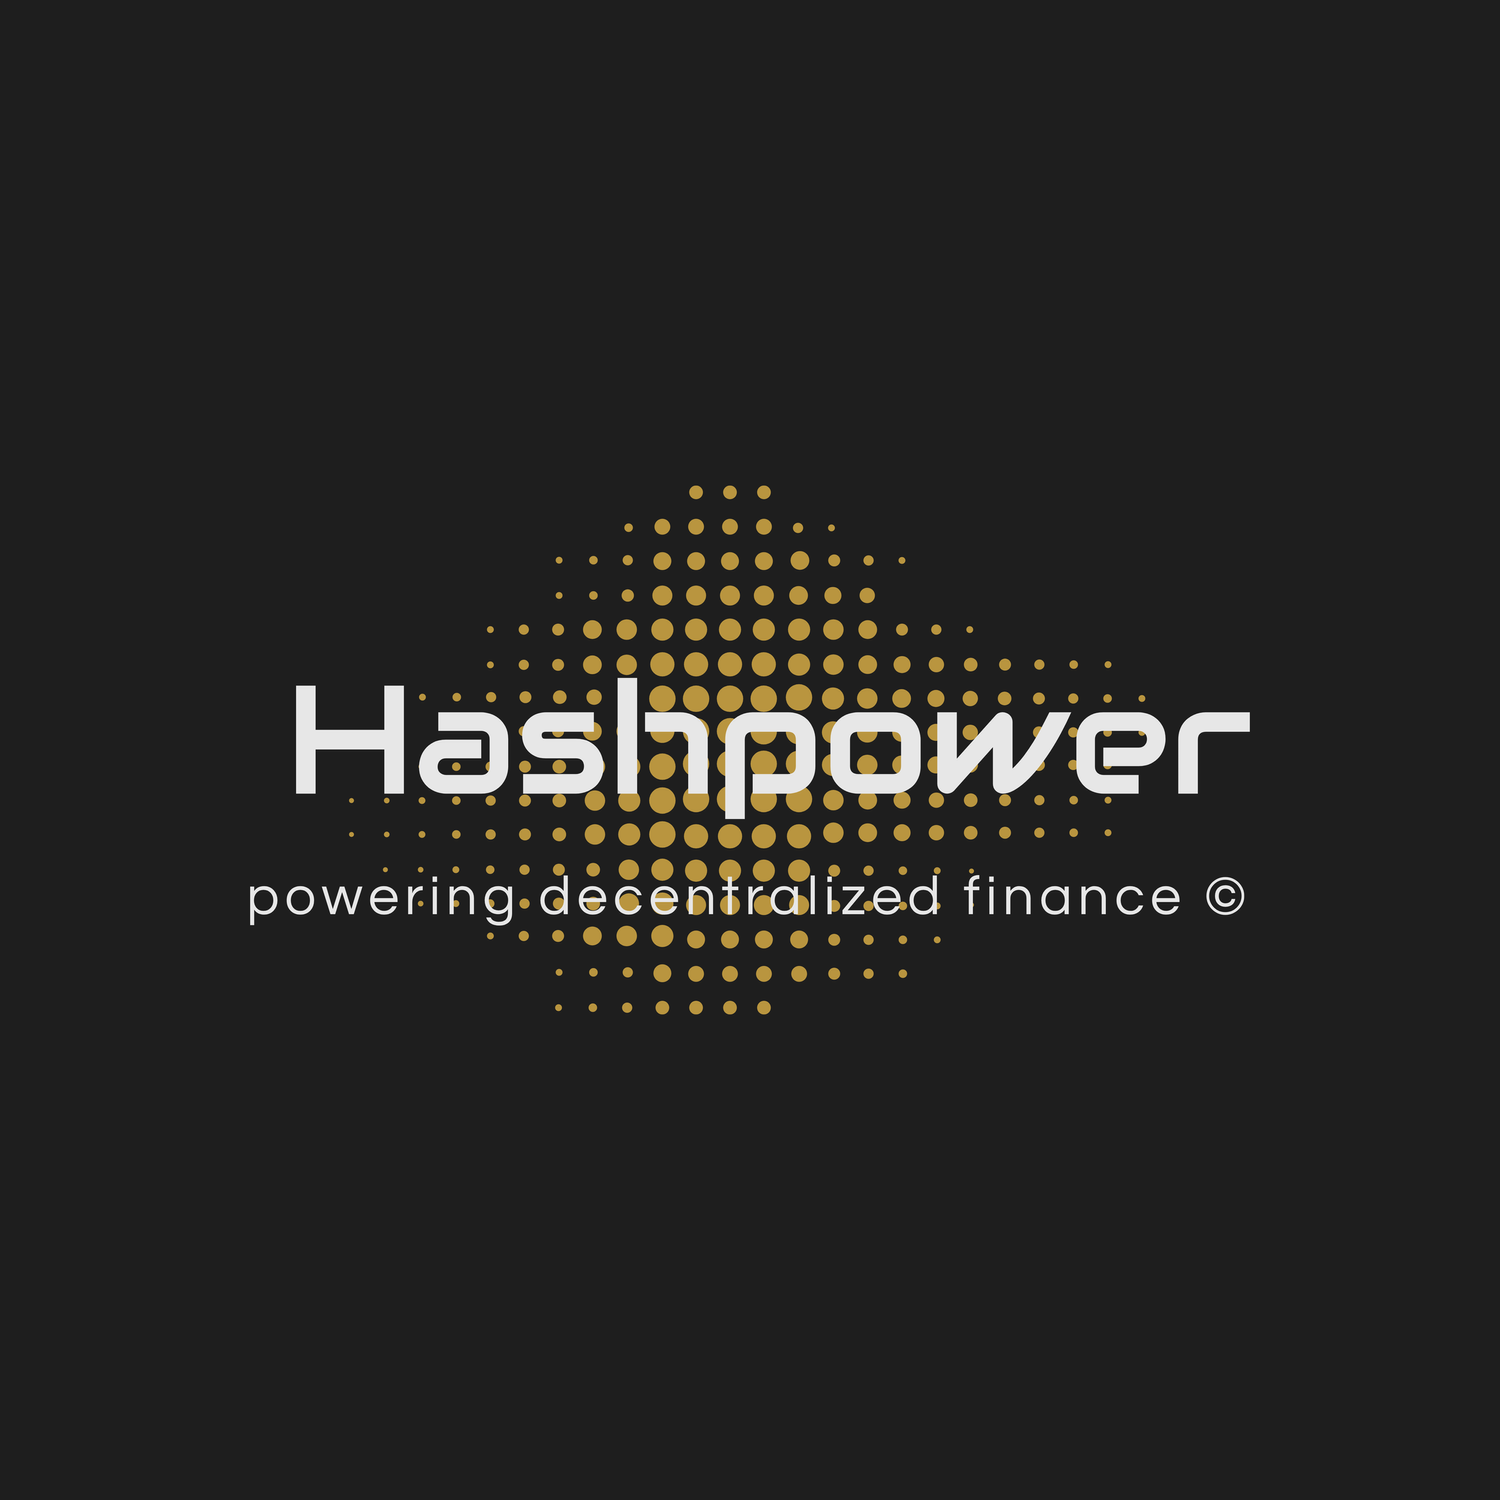 Hashpower - powering decentralized finance (c)